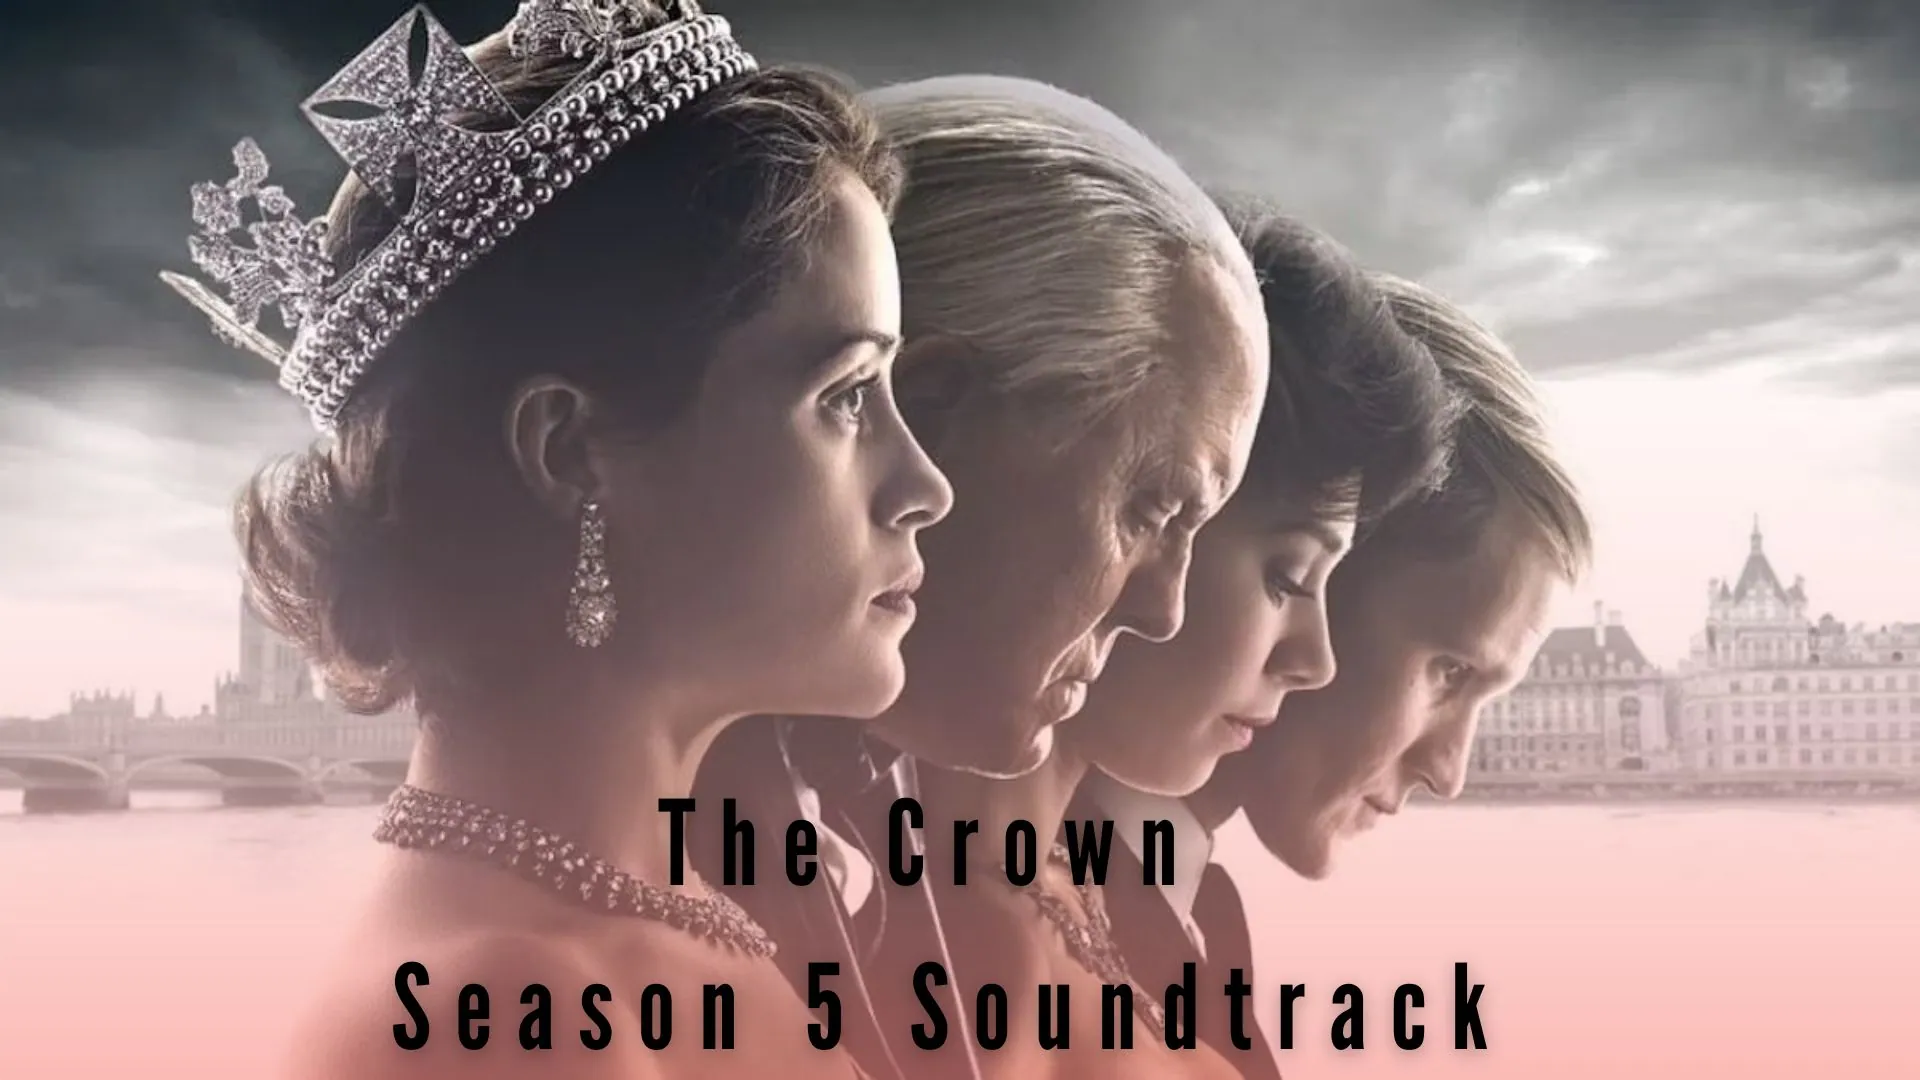 The Crow Season 5 Soundtrack